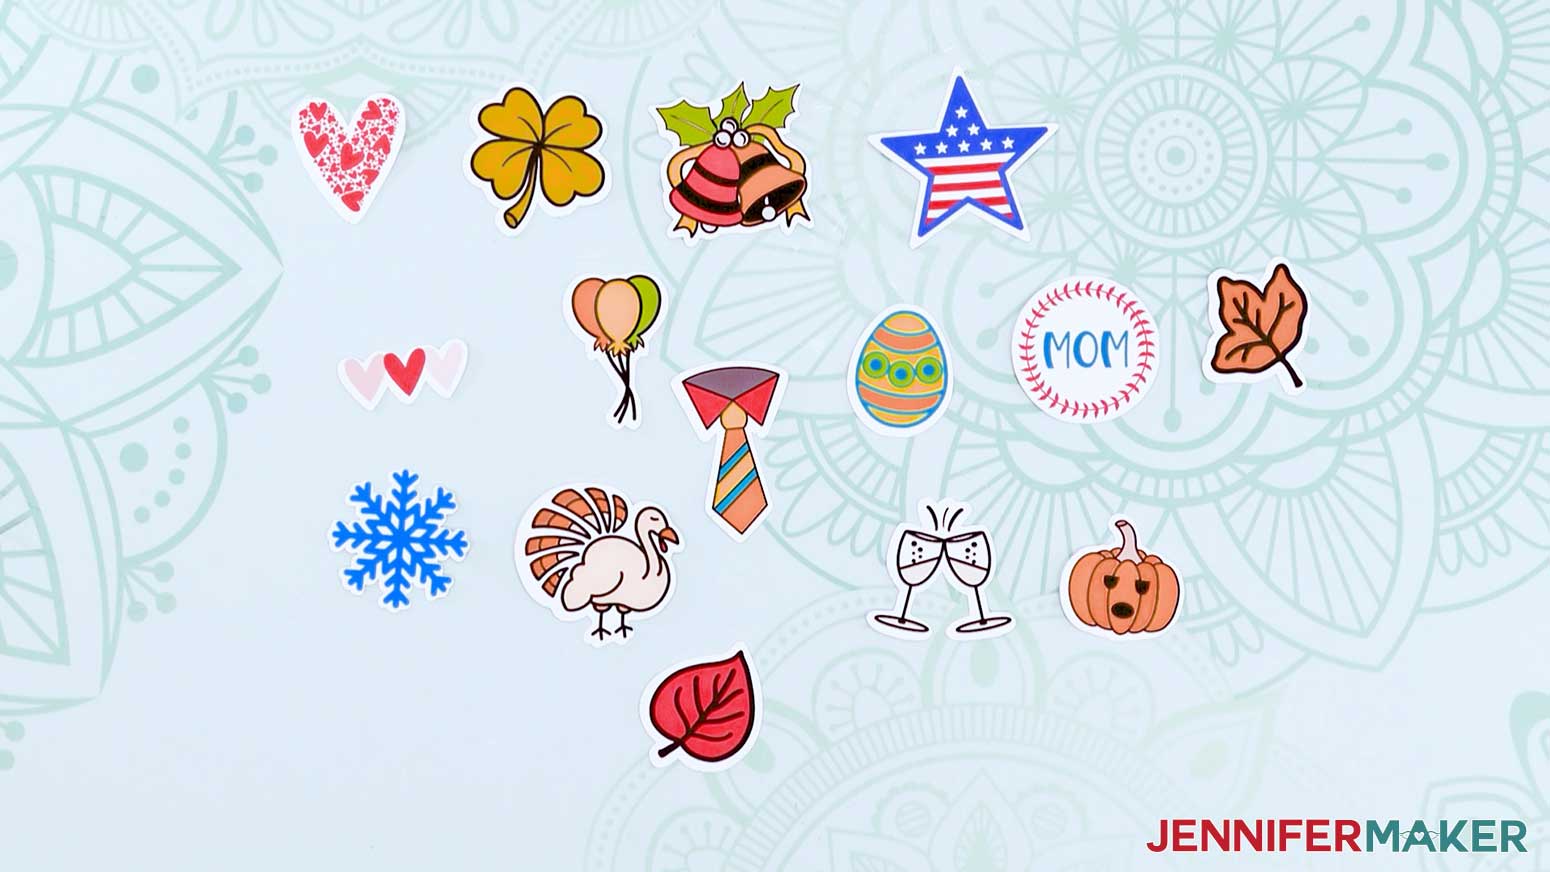 fun holiday stickers made by jennifermaker